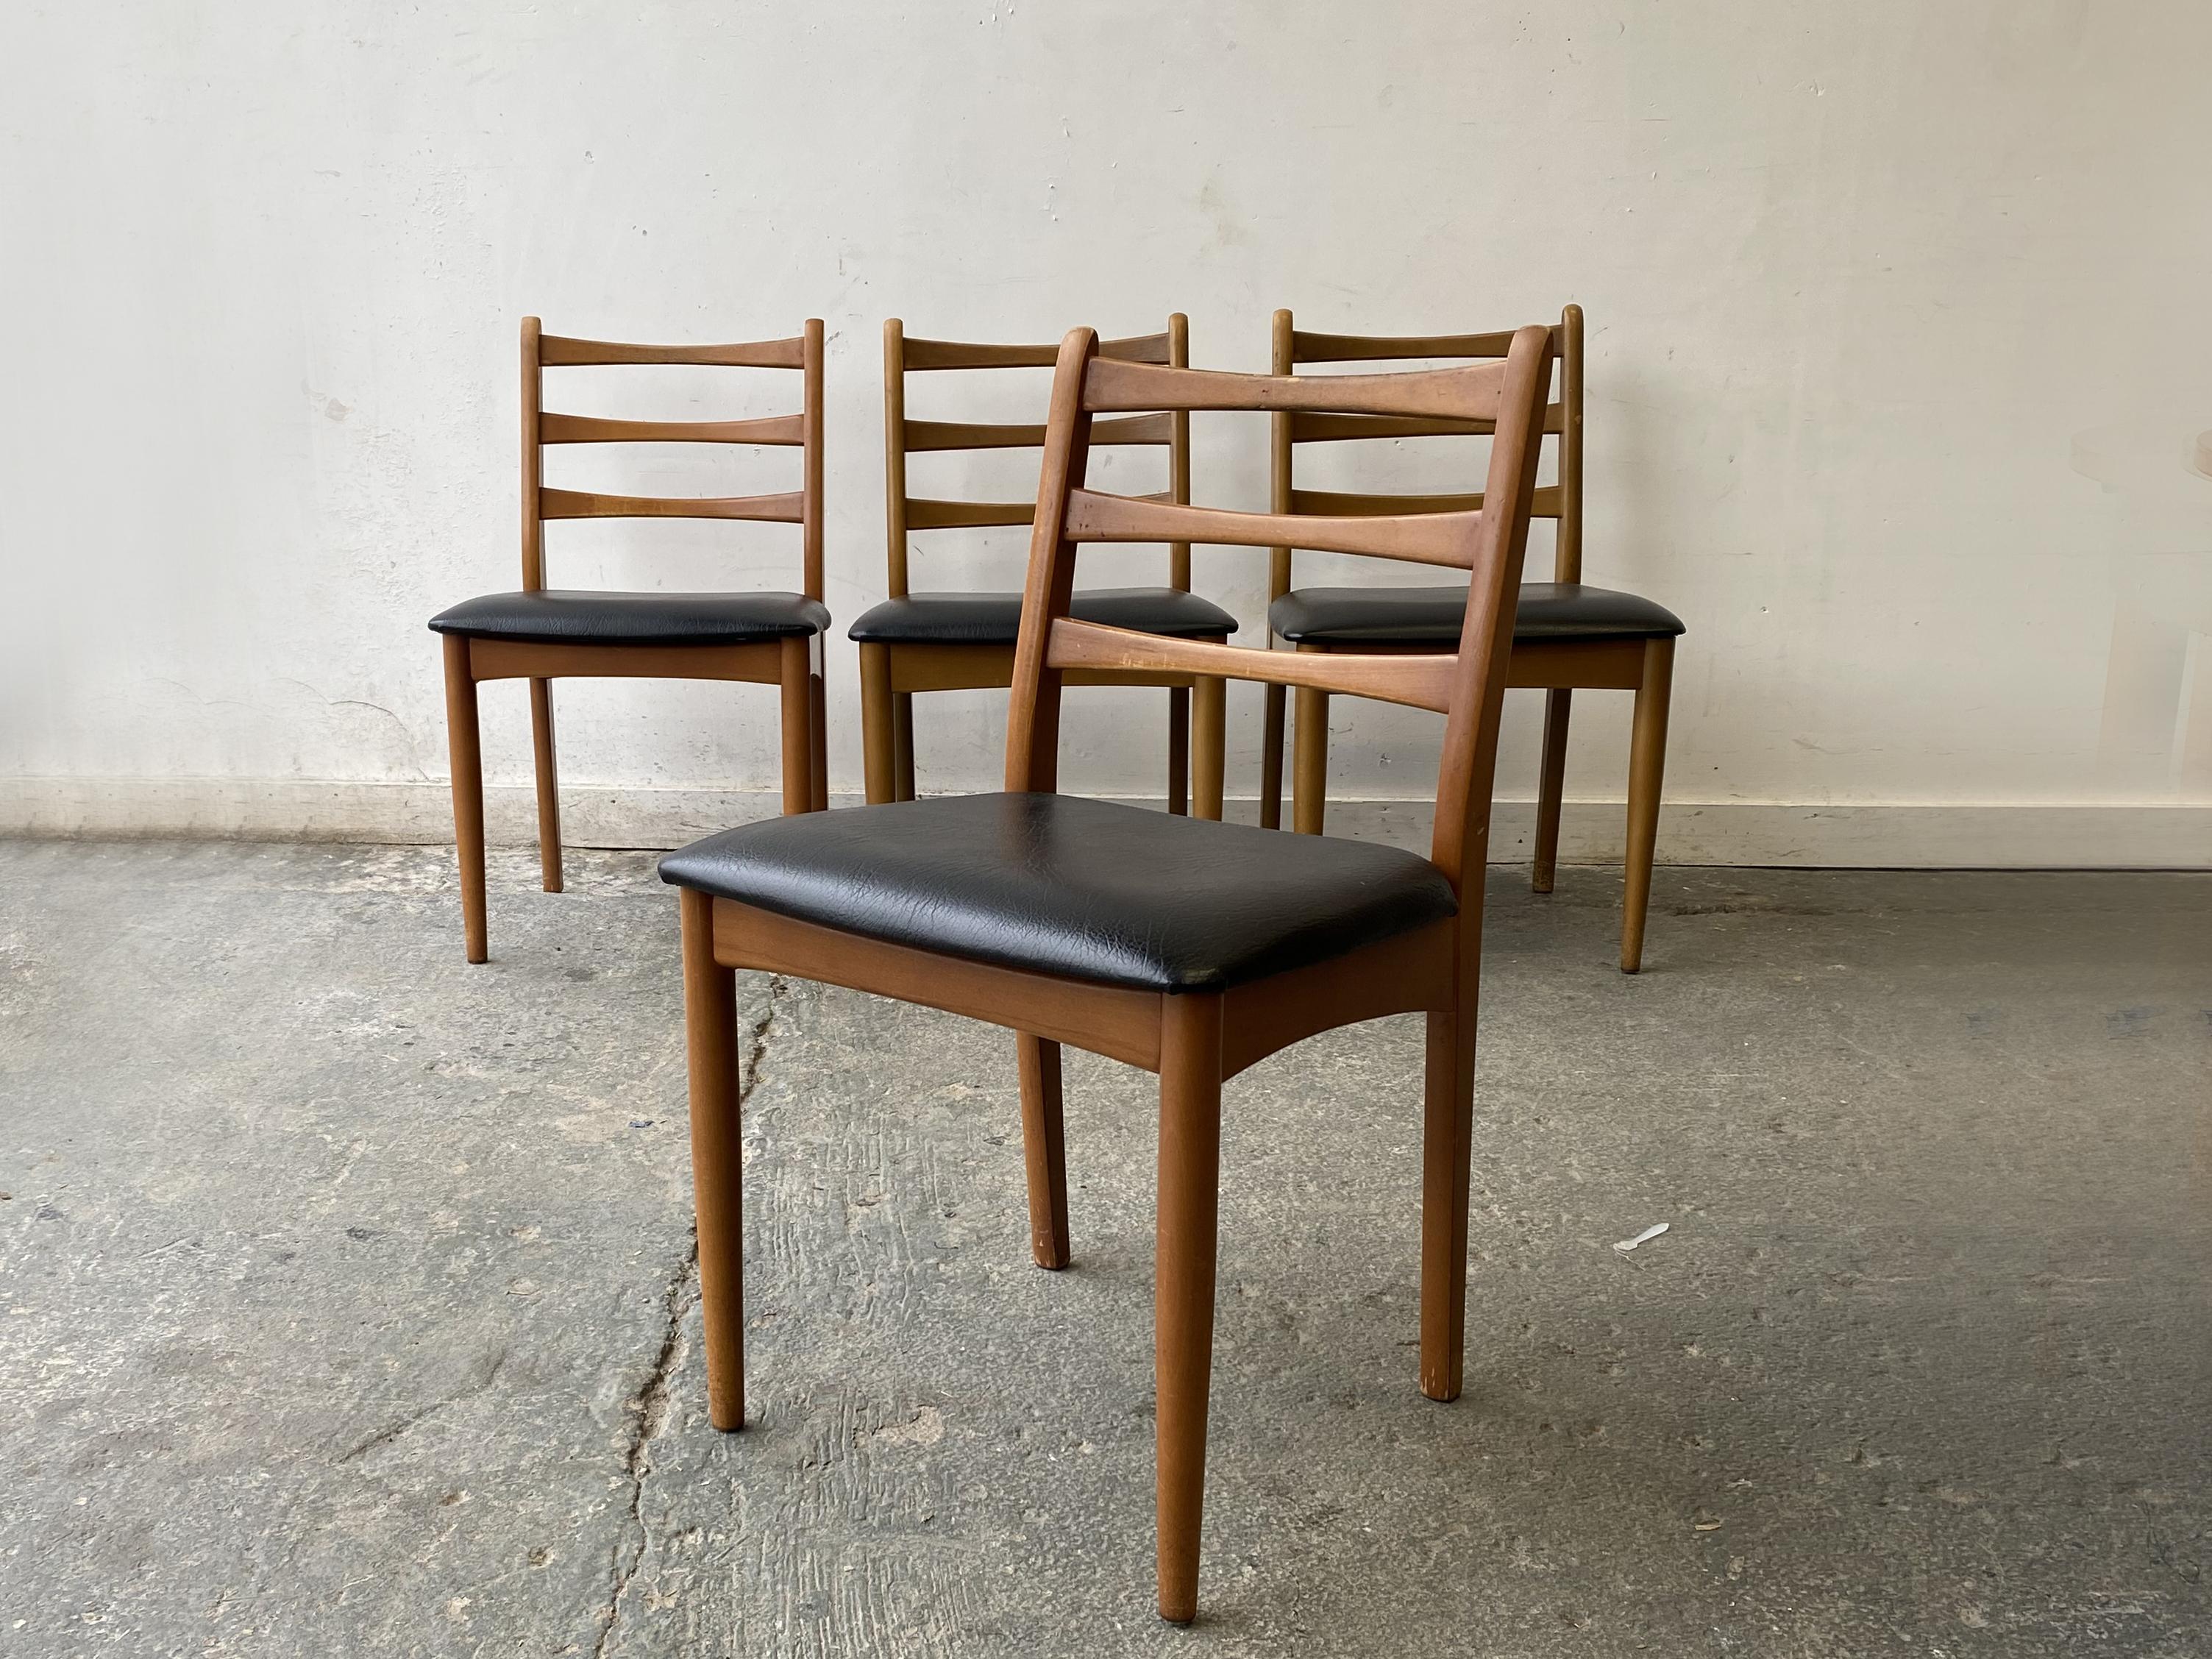 20th Century Dining set by Schreiber Furniture - 1960’s mid century modern For Sale